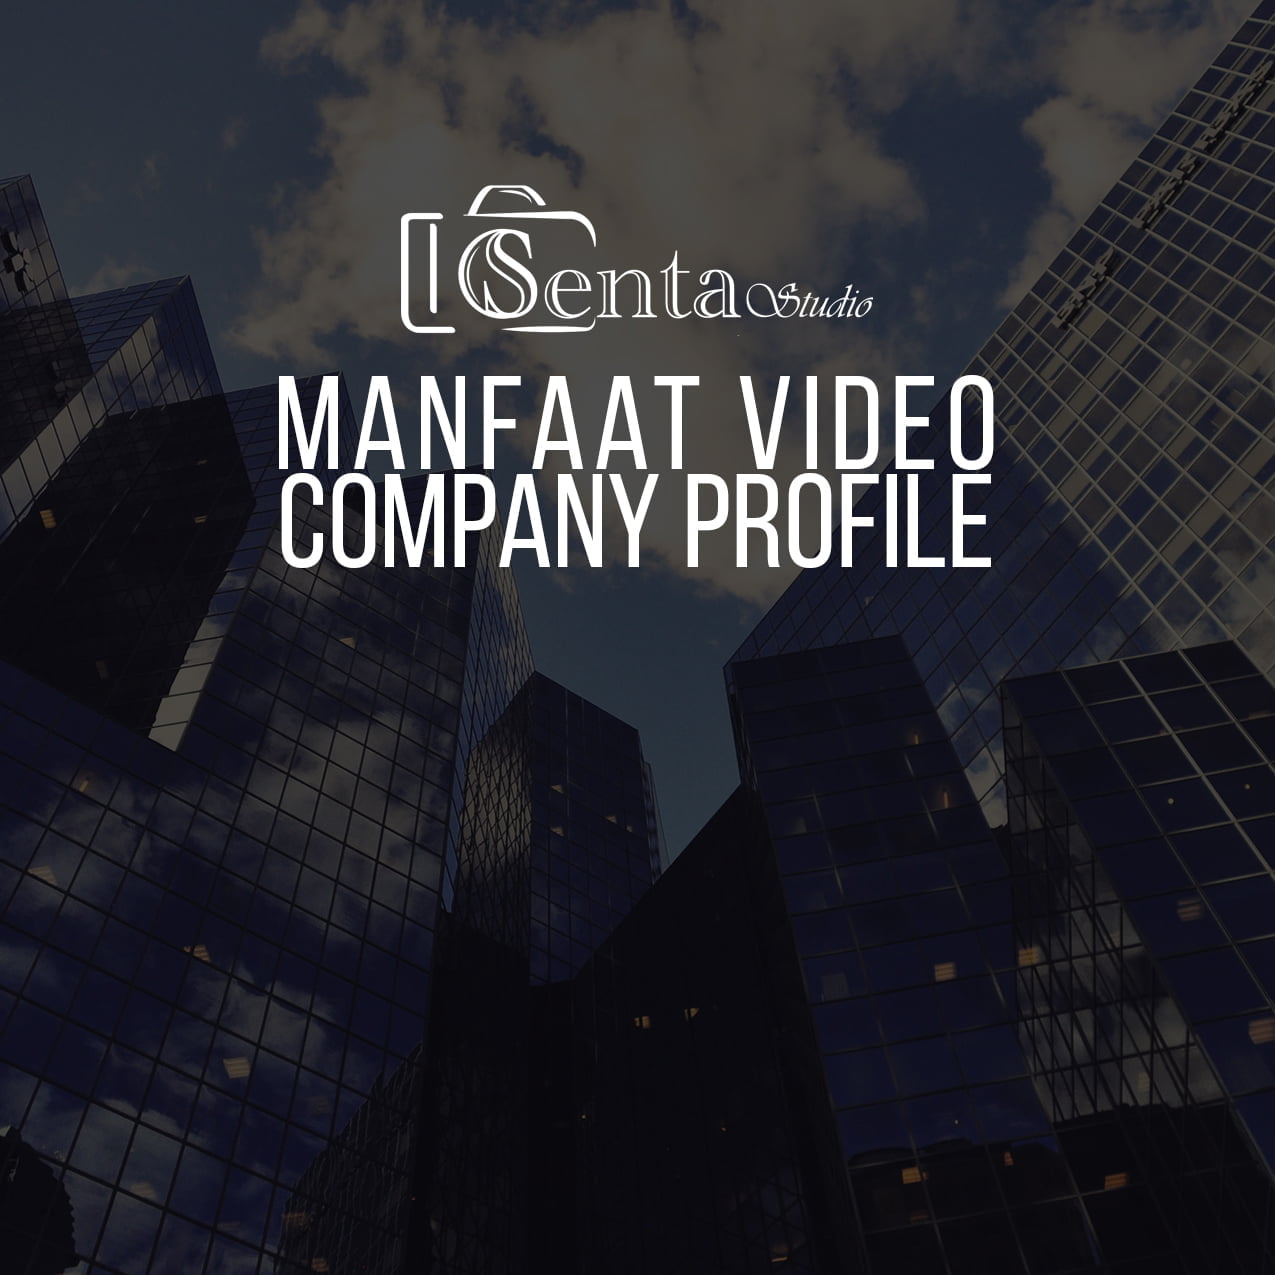 membuat-video-company-profile-senta-studio-thumb